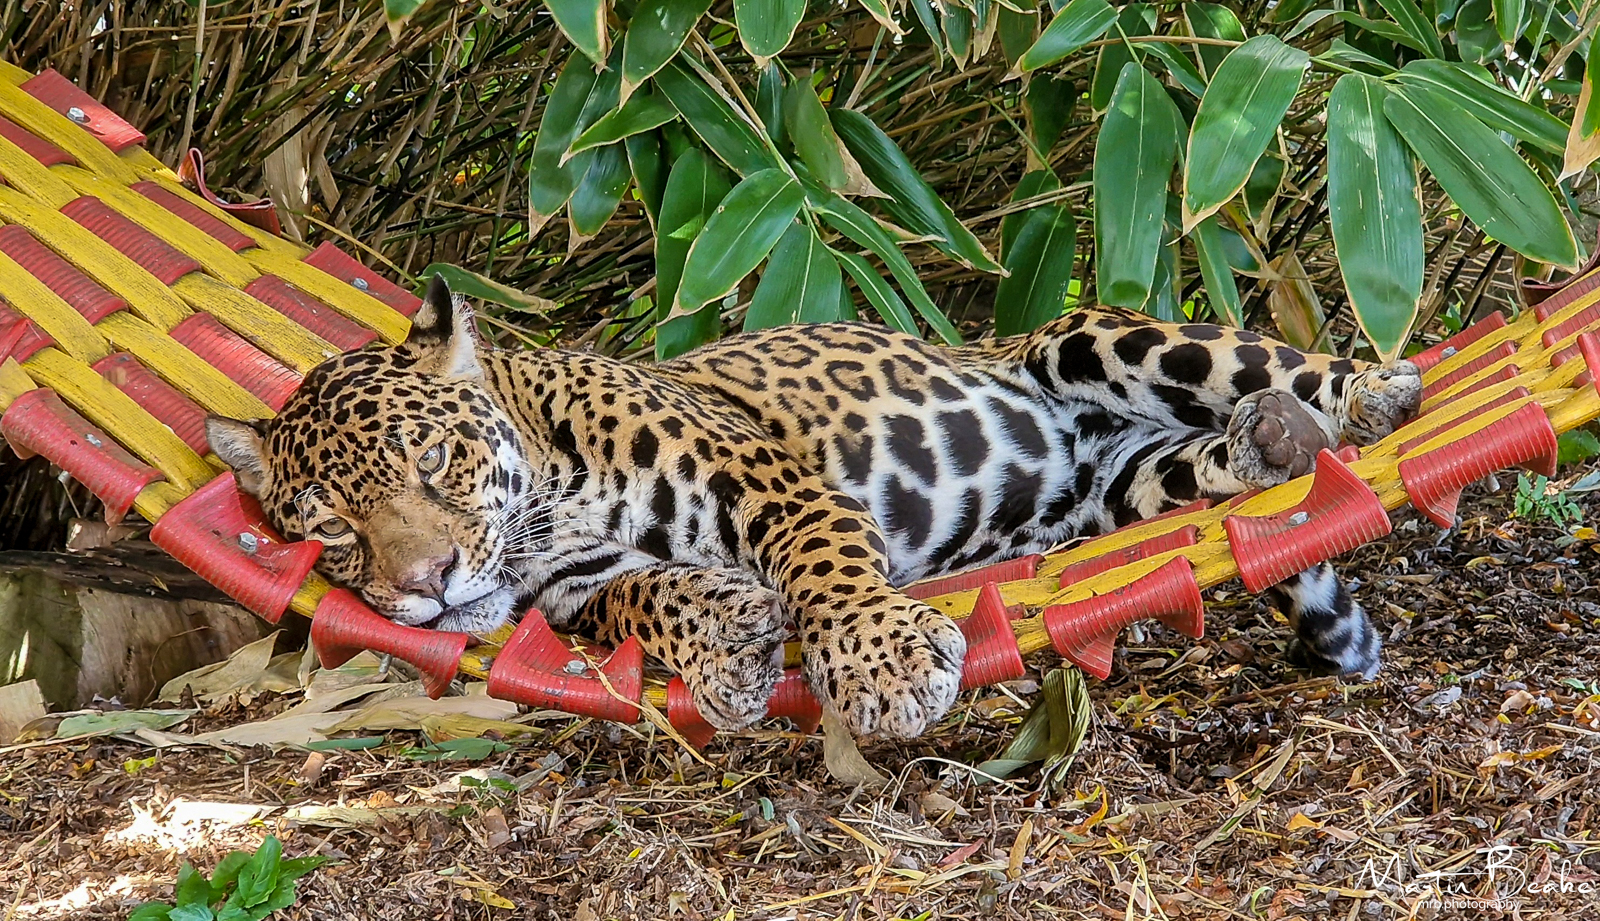 Jaguar relaxing on hammock